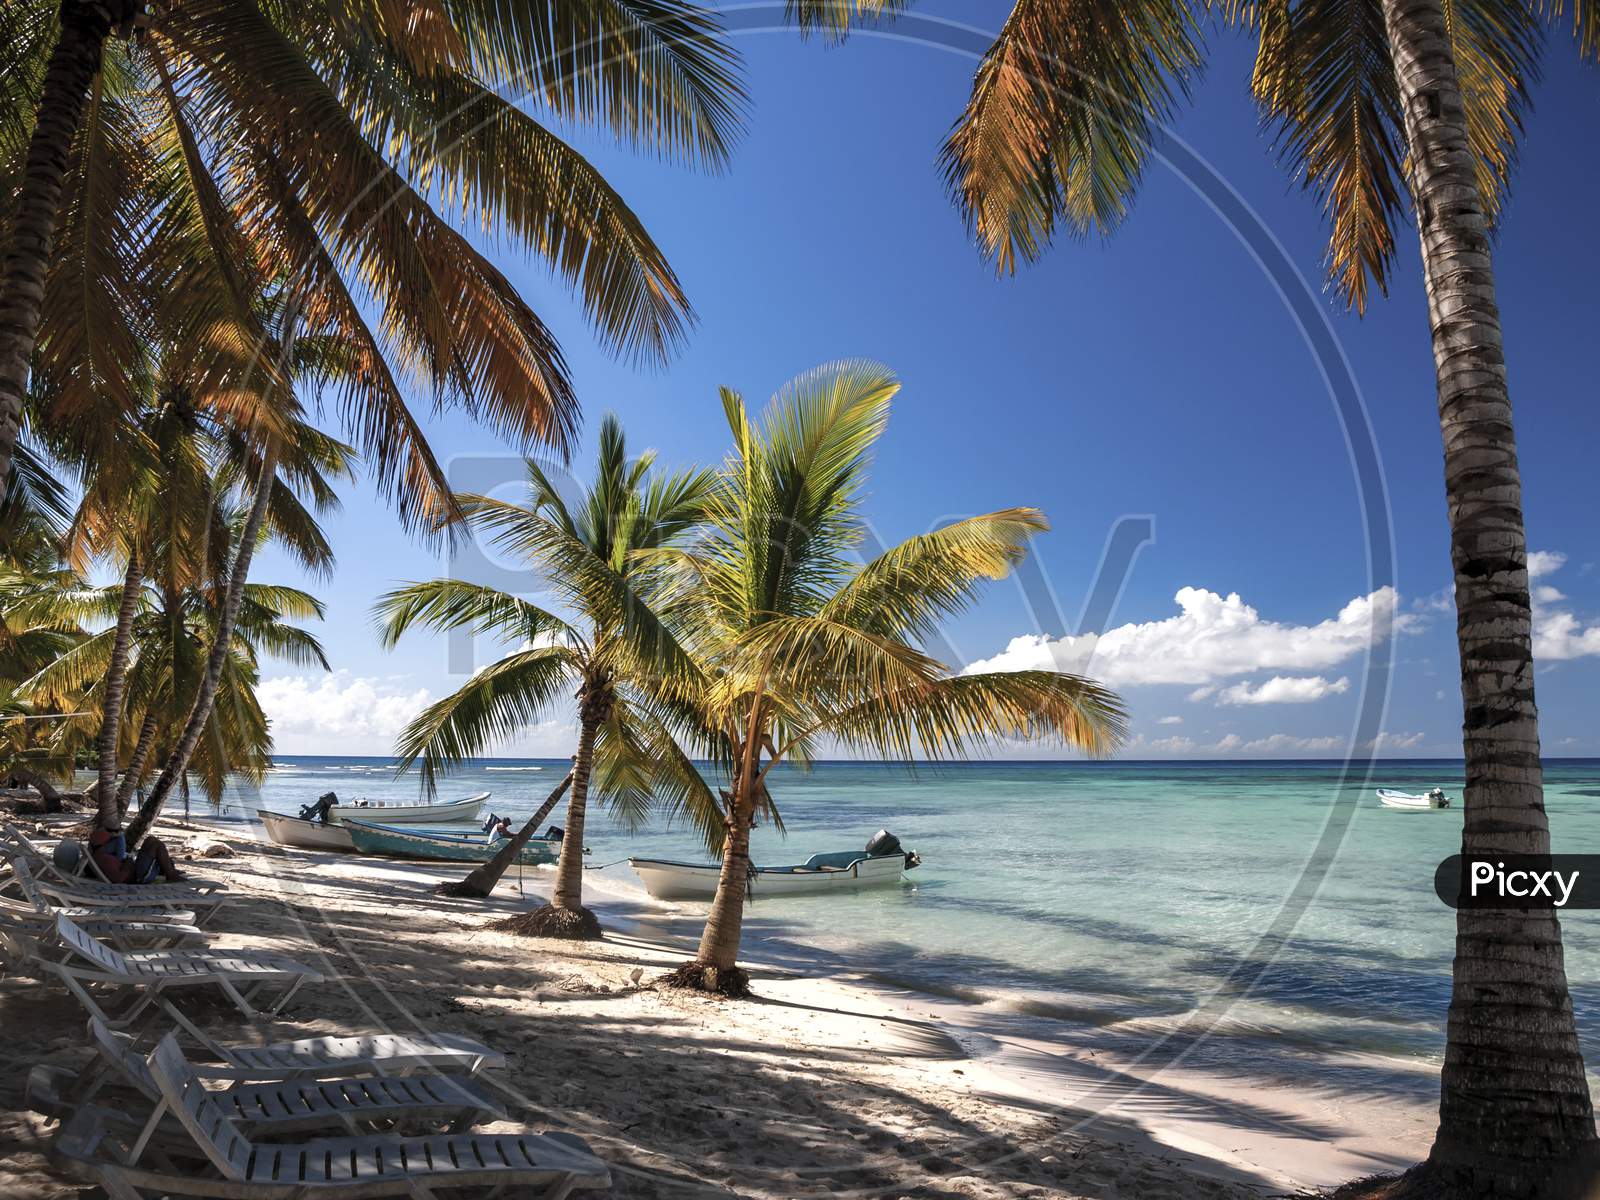 A relaxing shady part of a Caribbean beach.